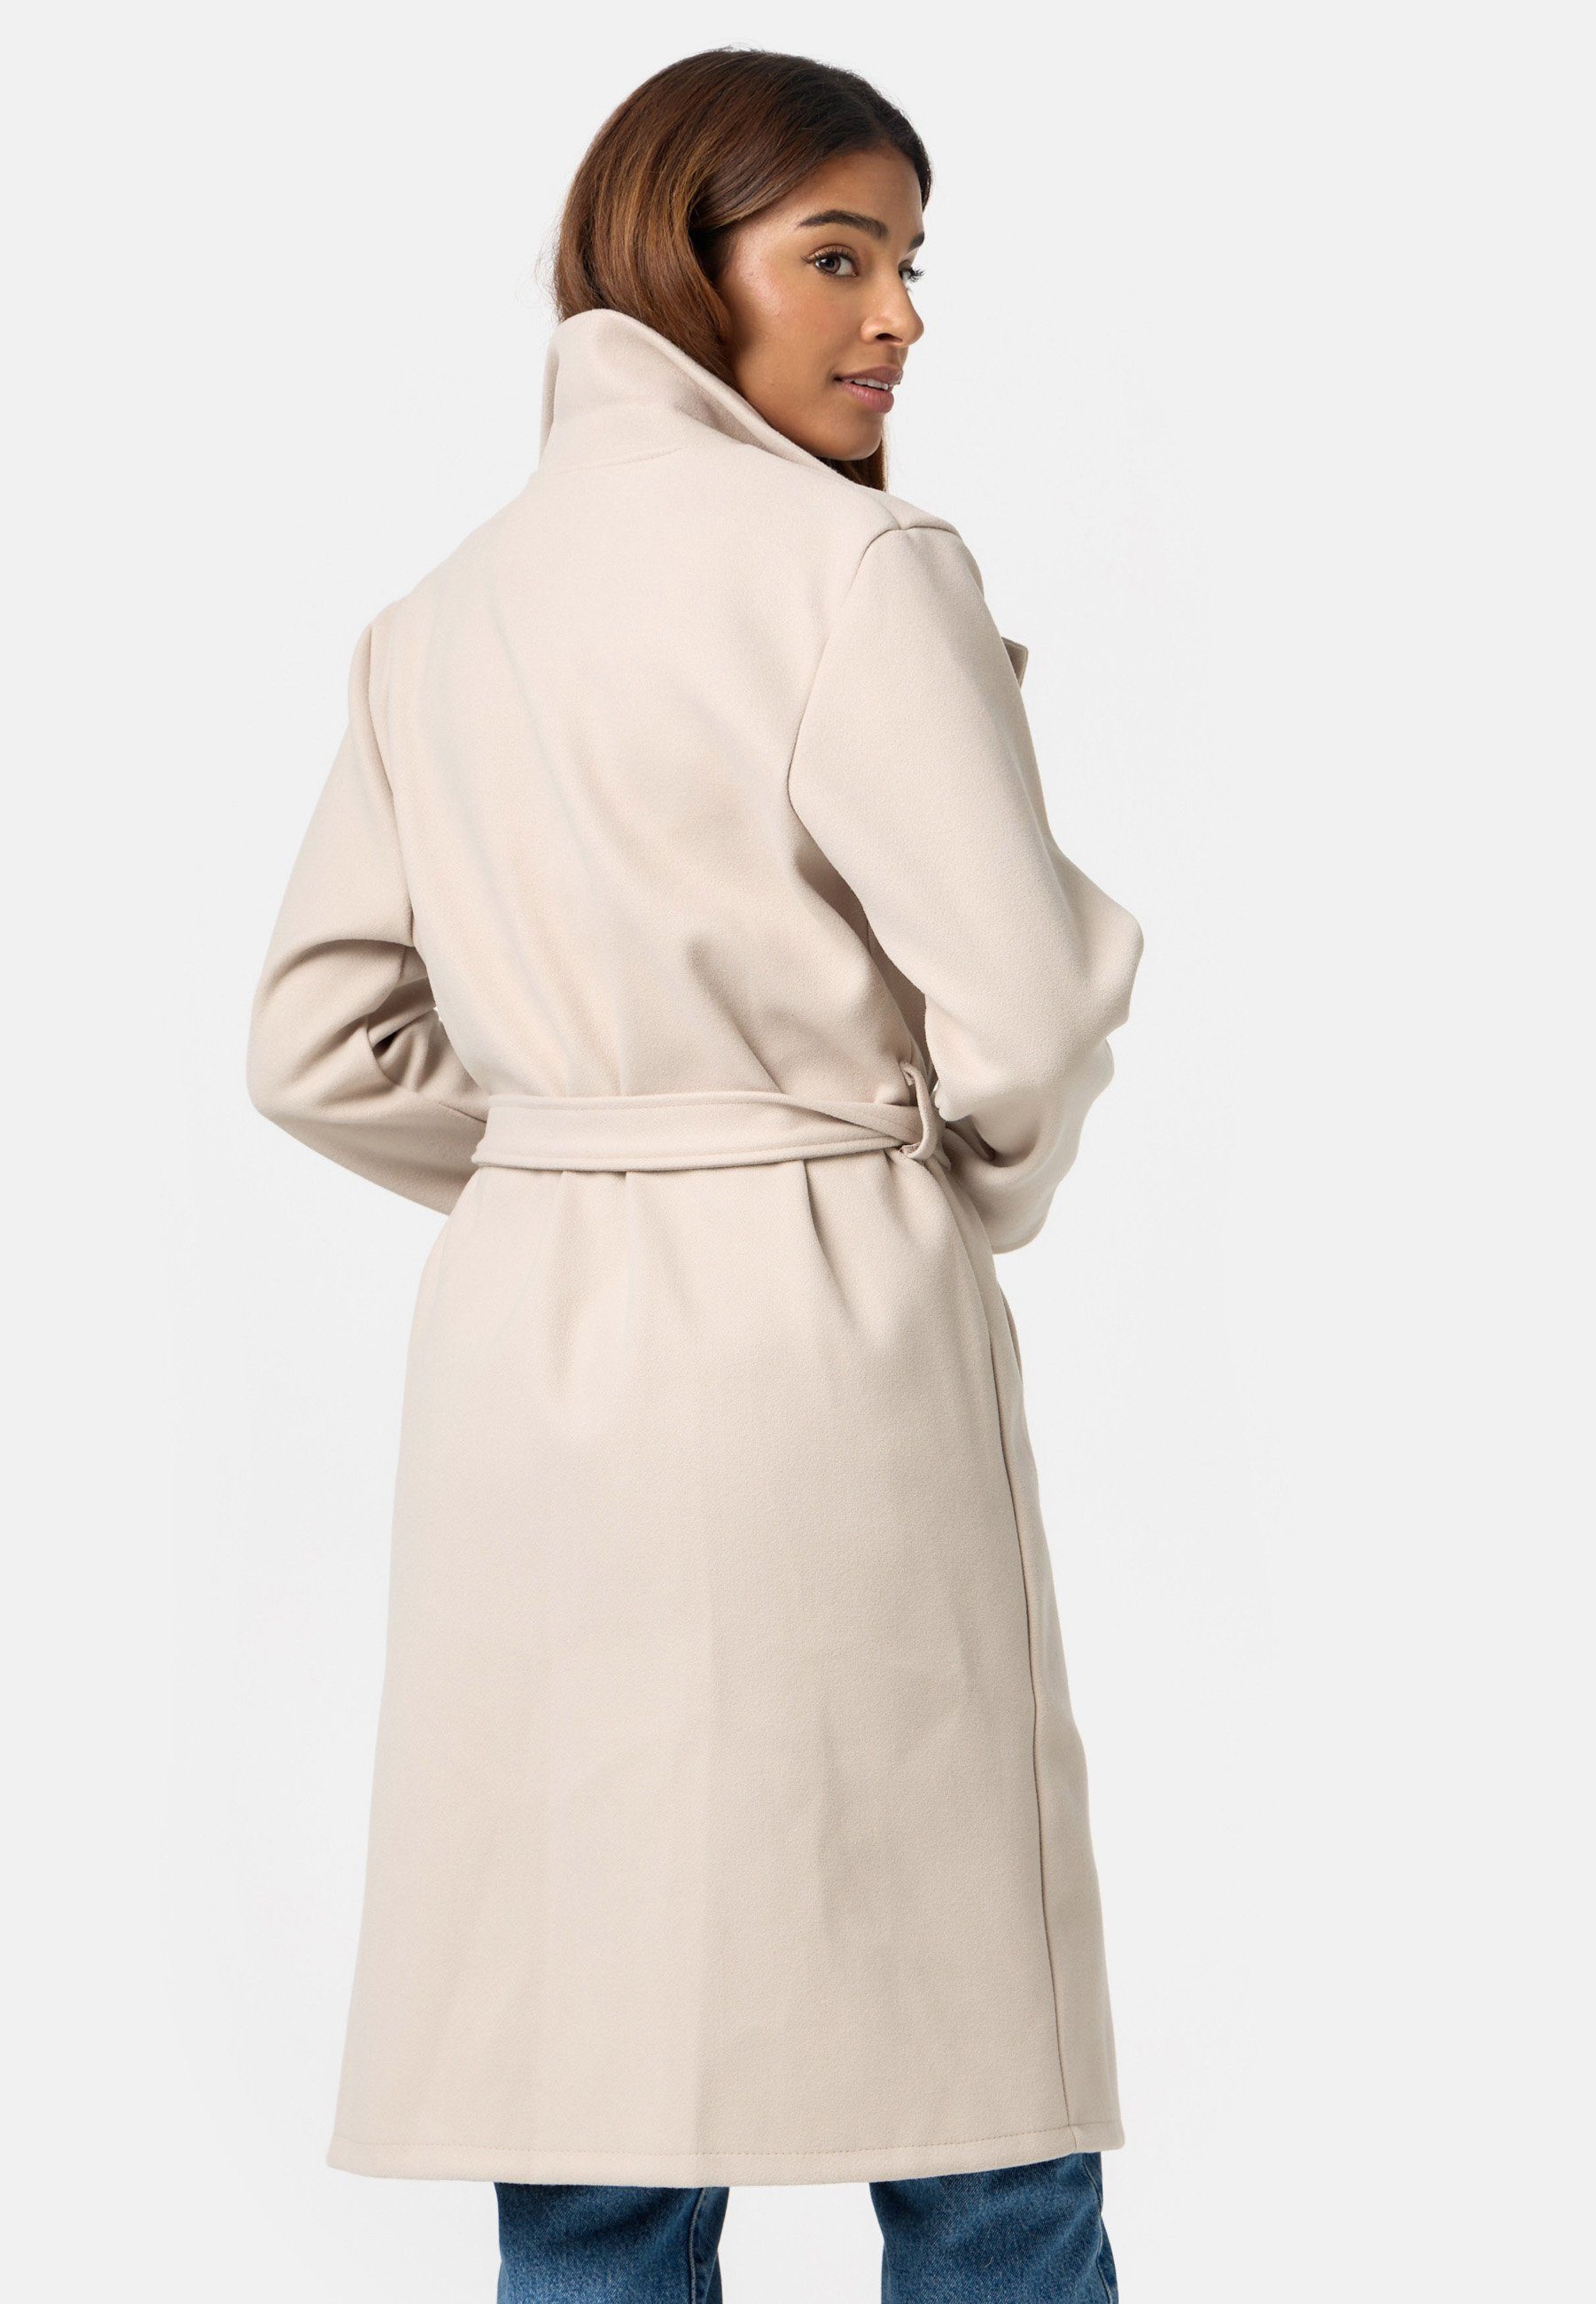 Mantel Damen Gürtel TRENCHCOAT Worldclassca langer Worldclassca Trenchcoat mit Creme Reverskragen